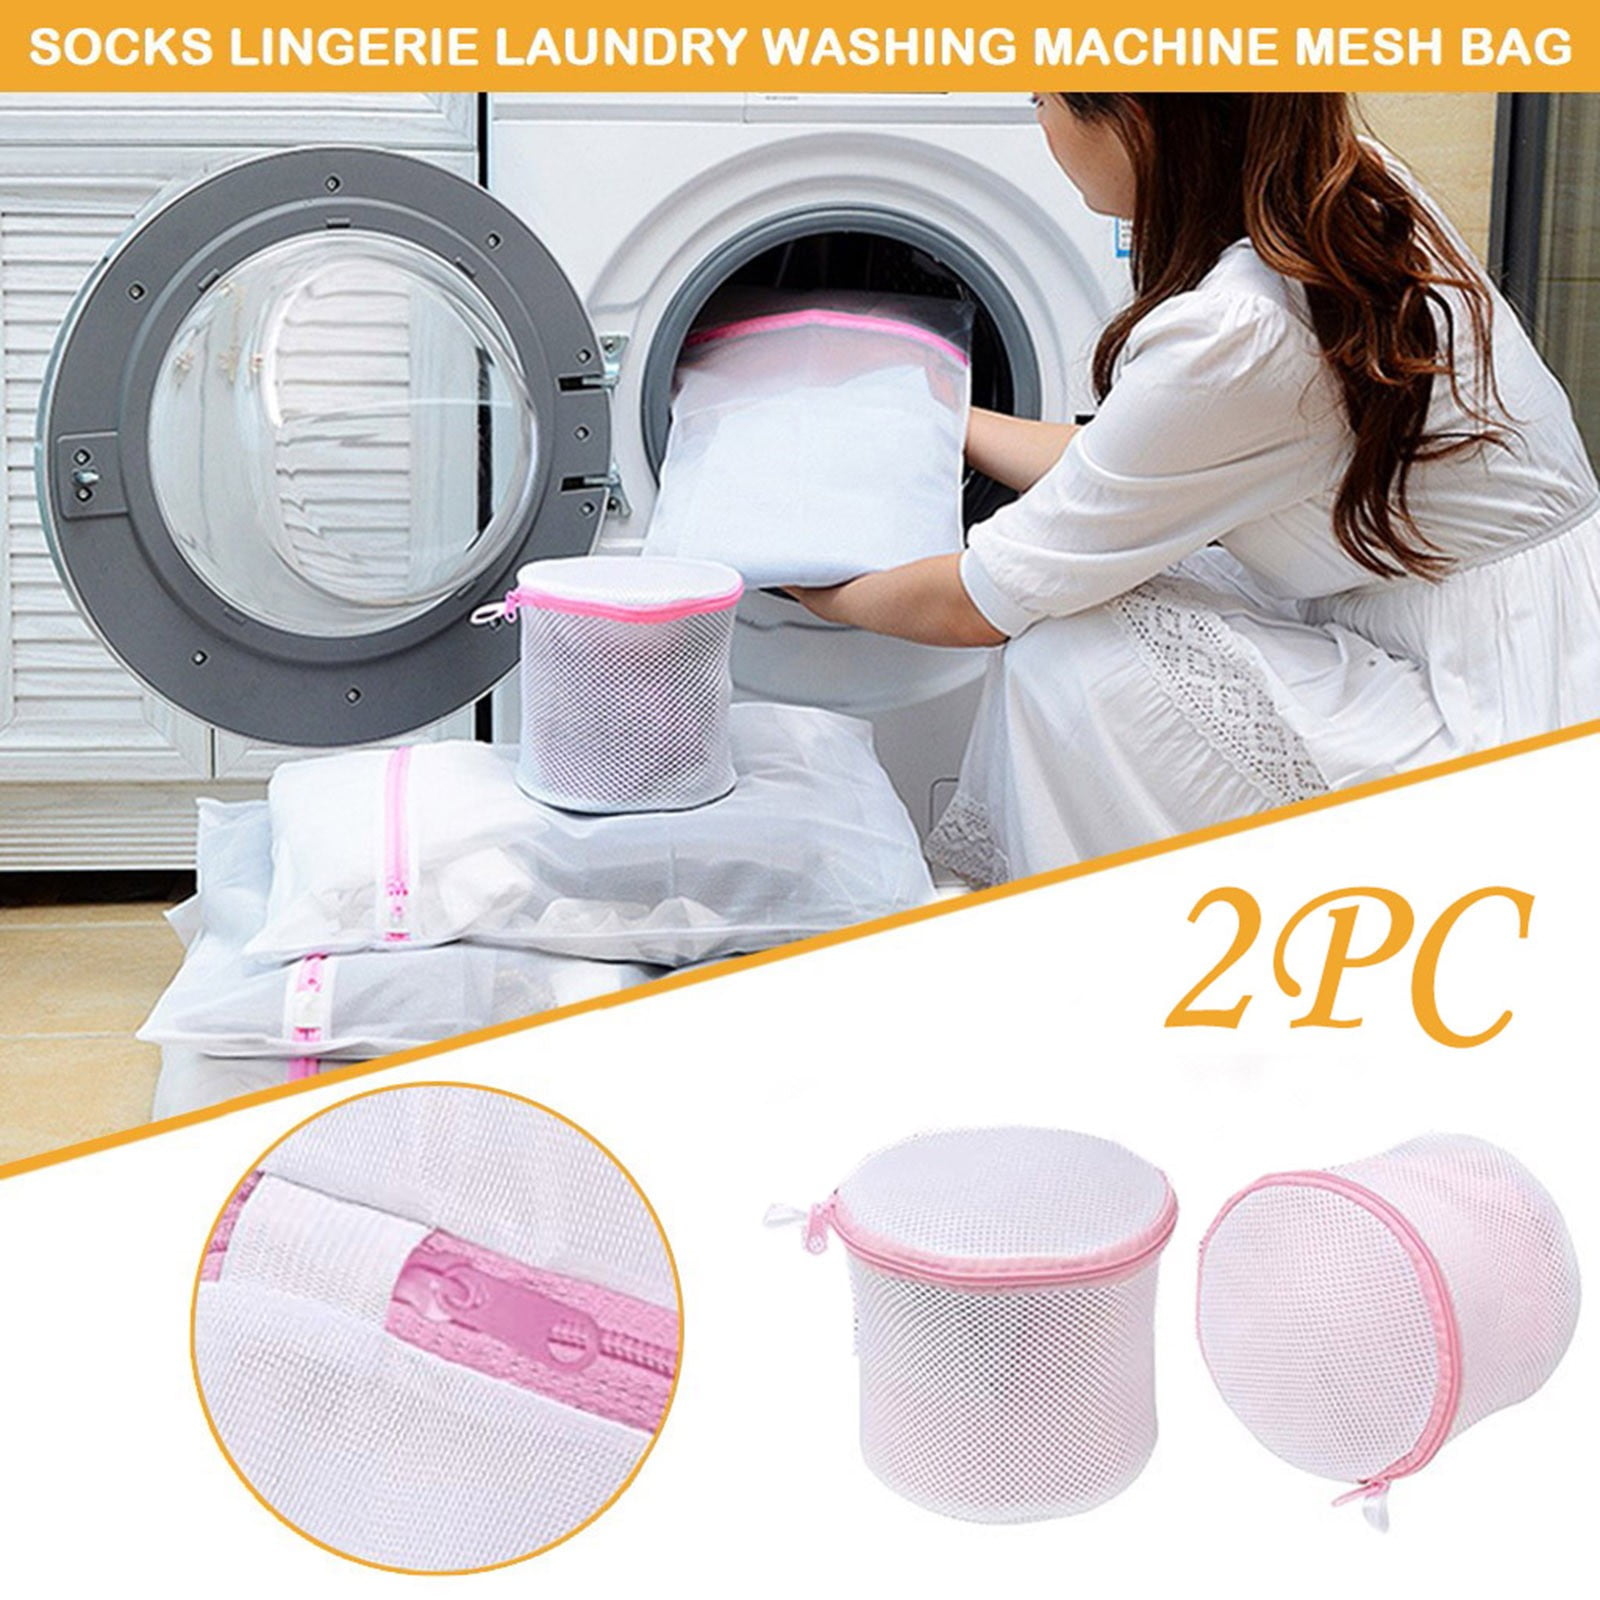 NEW Washing Machine Net Mesh Bag For Underwear Clothes Socks  Bra Aid Laundry 